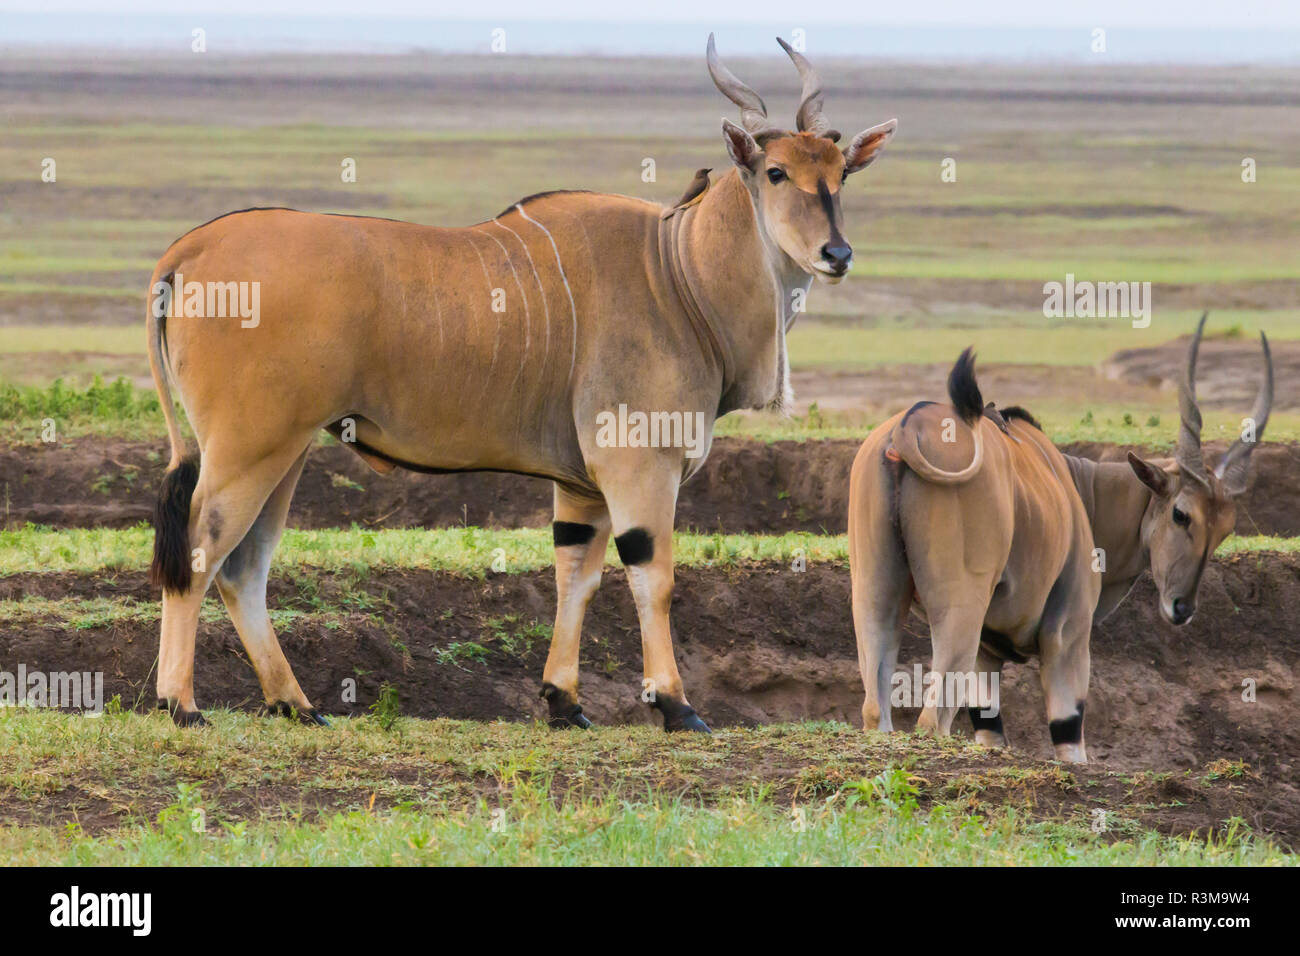 Africa. Tanzania. Eland (Taurotragus Oryx), a large antelope, at Ndutu, Serengeti National Park. Stock Photo